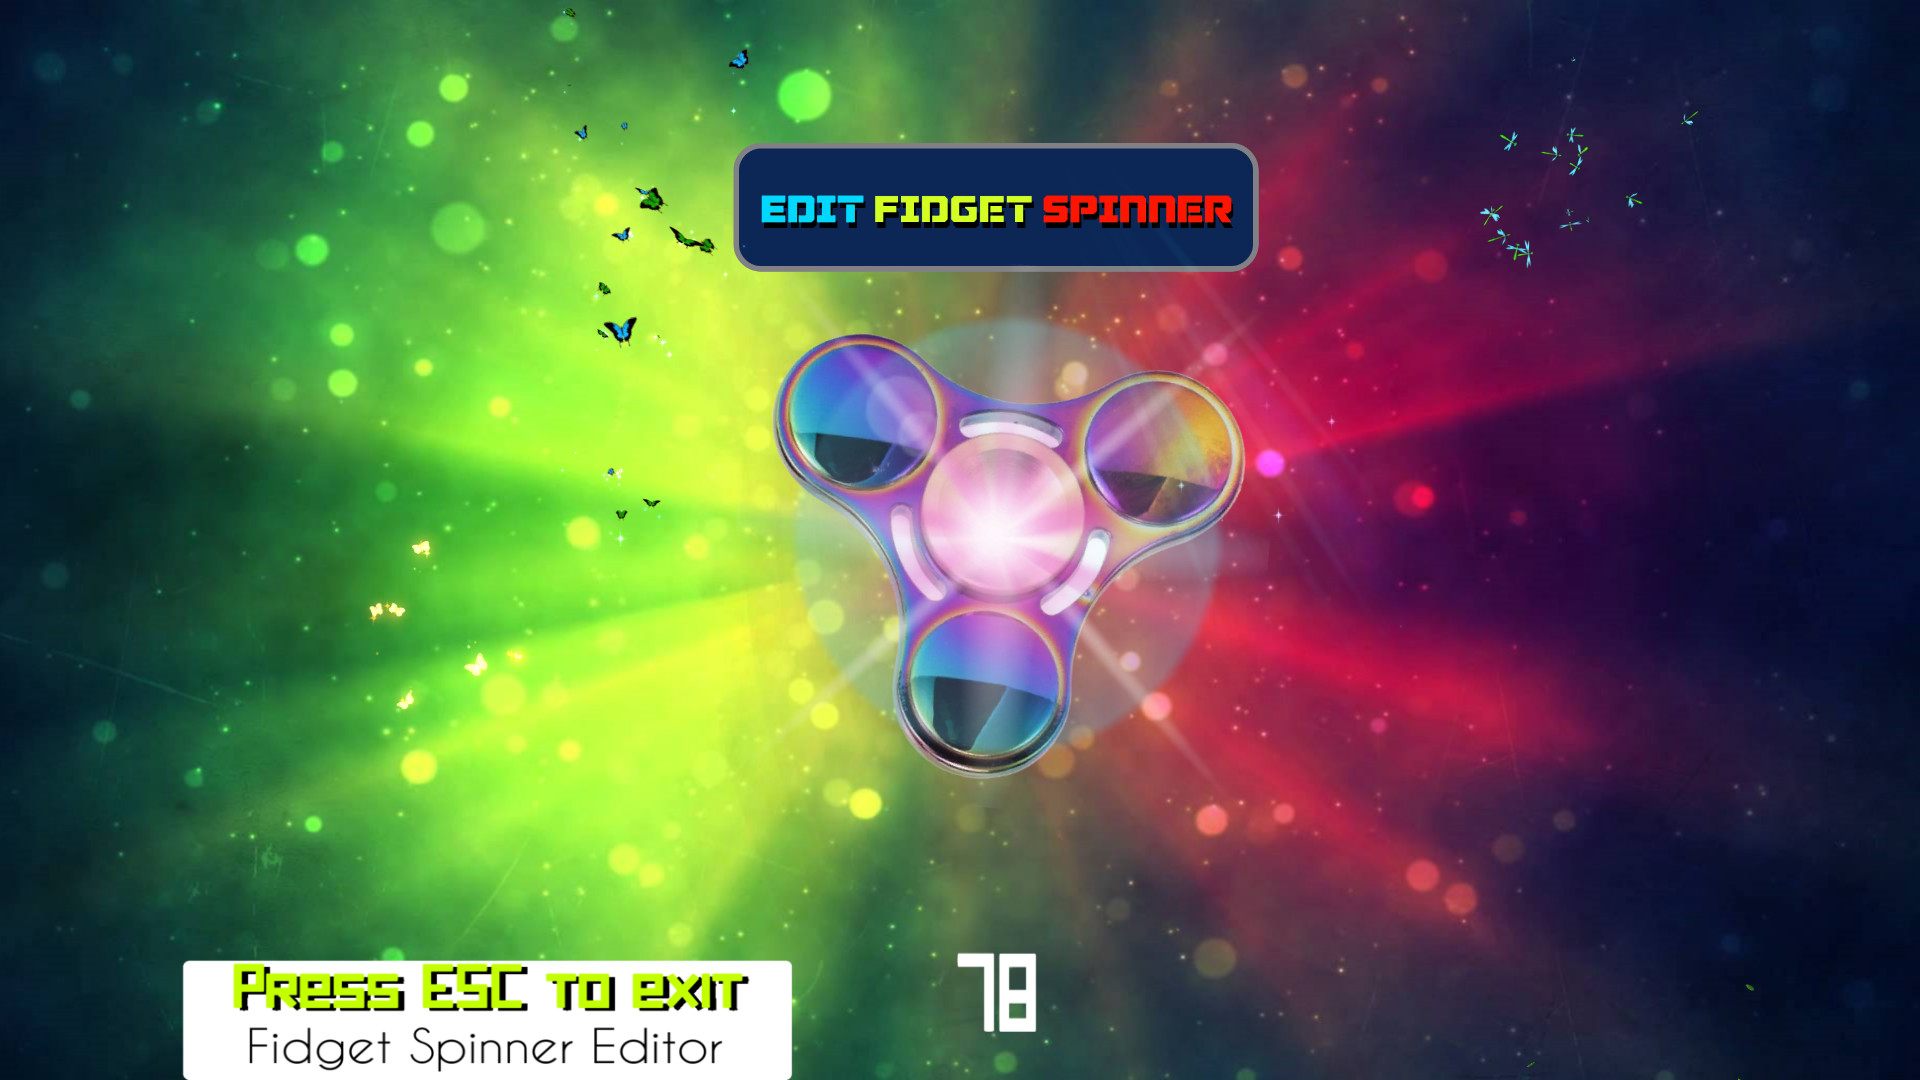 Fidget Spinner Editor - Expansion Pack 2 Featured Screenshot #1